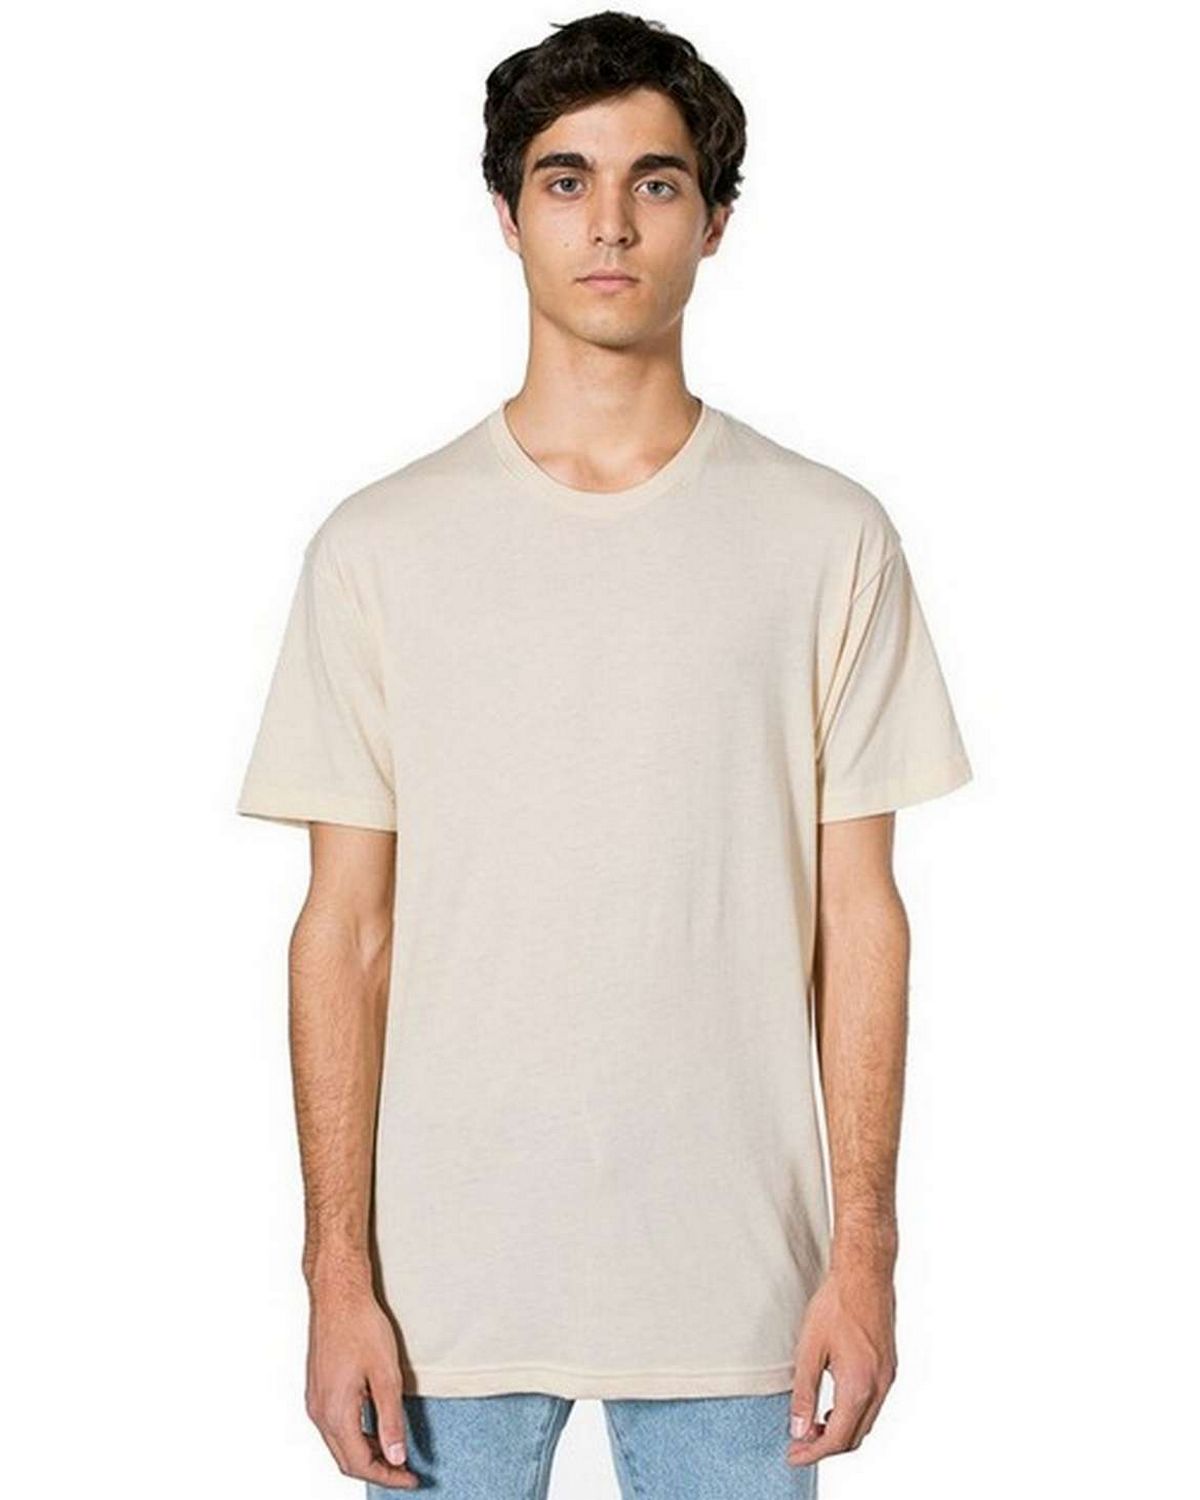 American Apparel BB410 Unisex Poly-Cotton Ringer T-Shirt